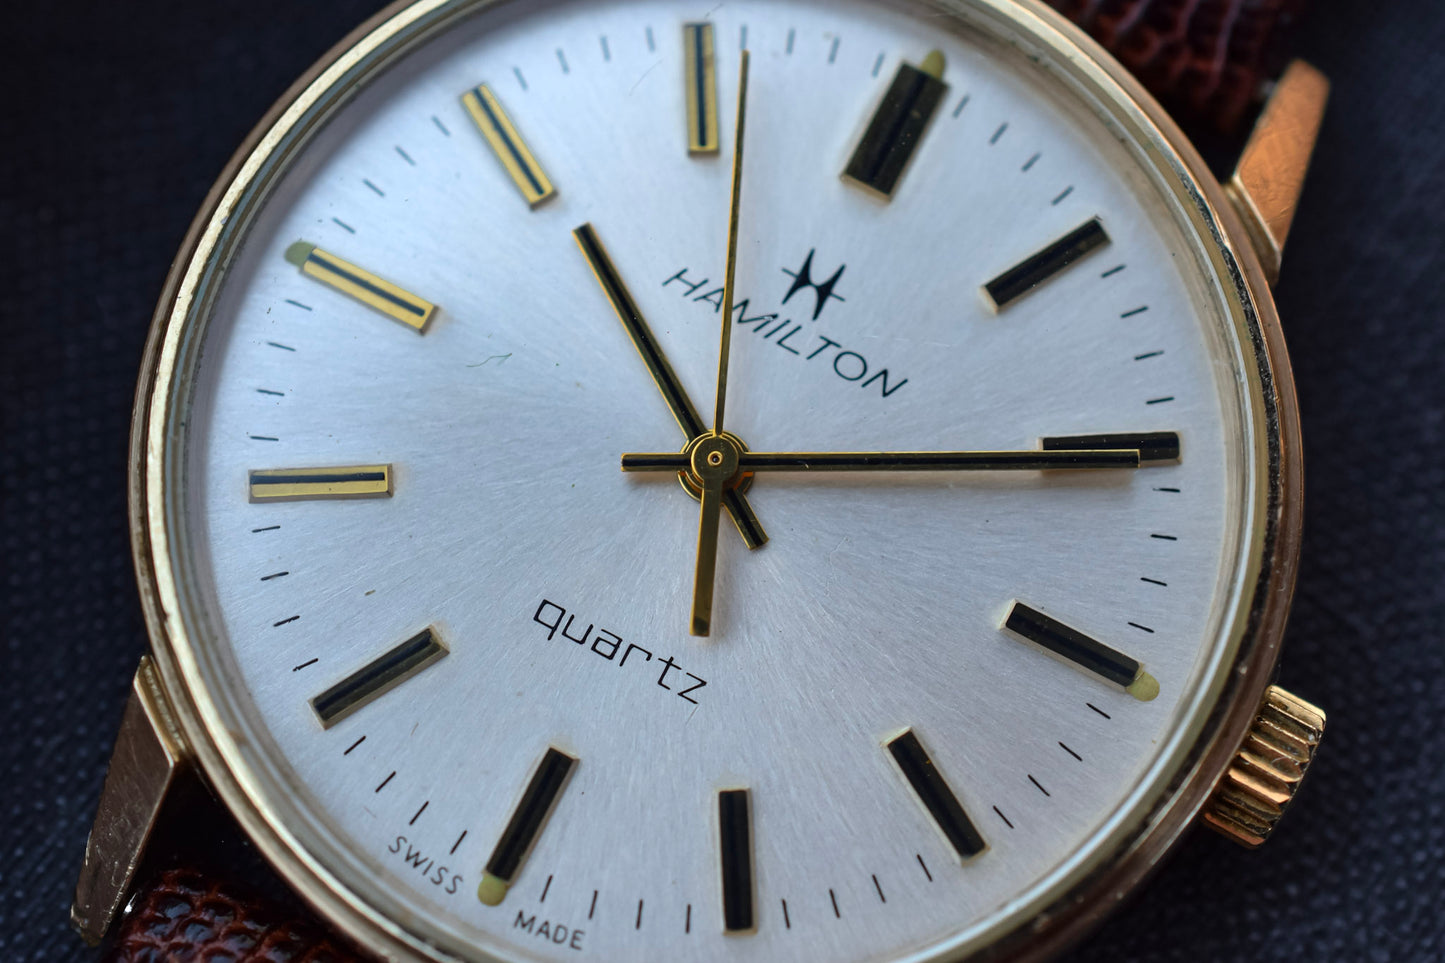 Vintage 10K Gold Filled Hamilton Quartz Watch - Award Piece